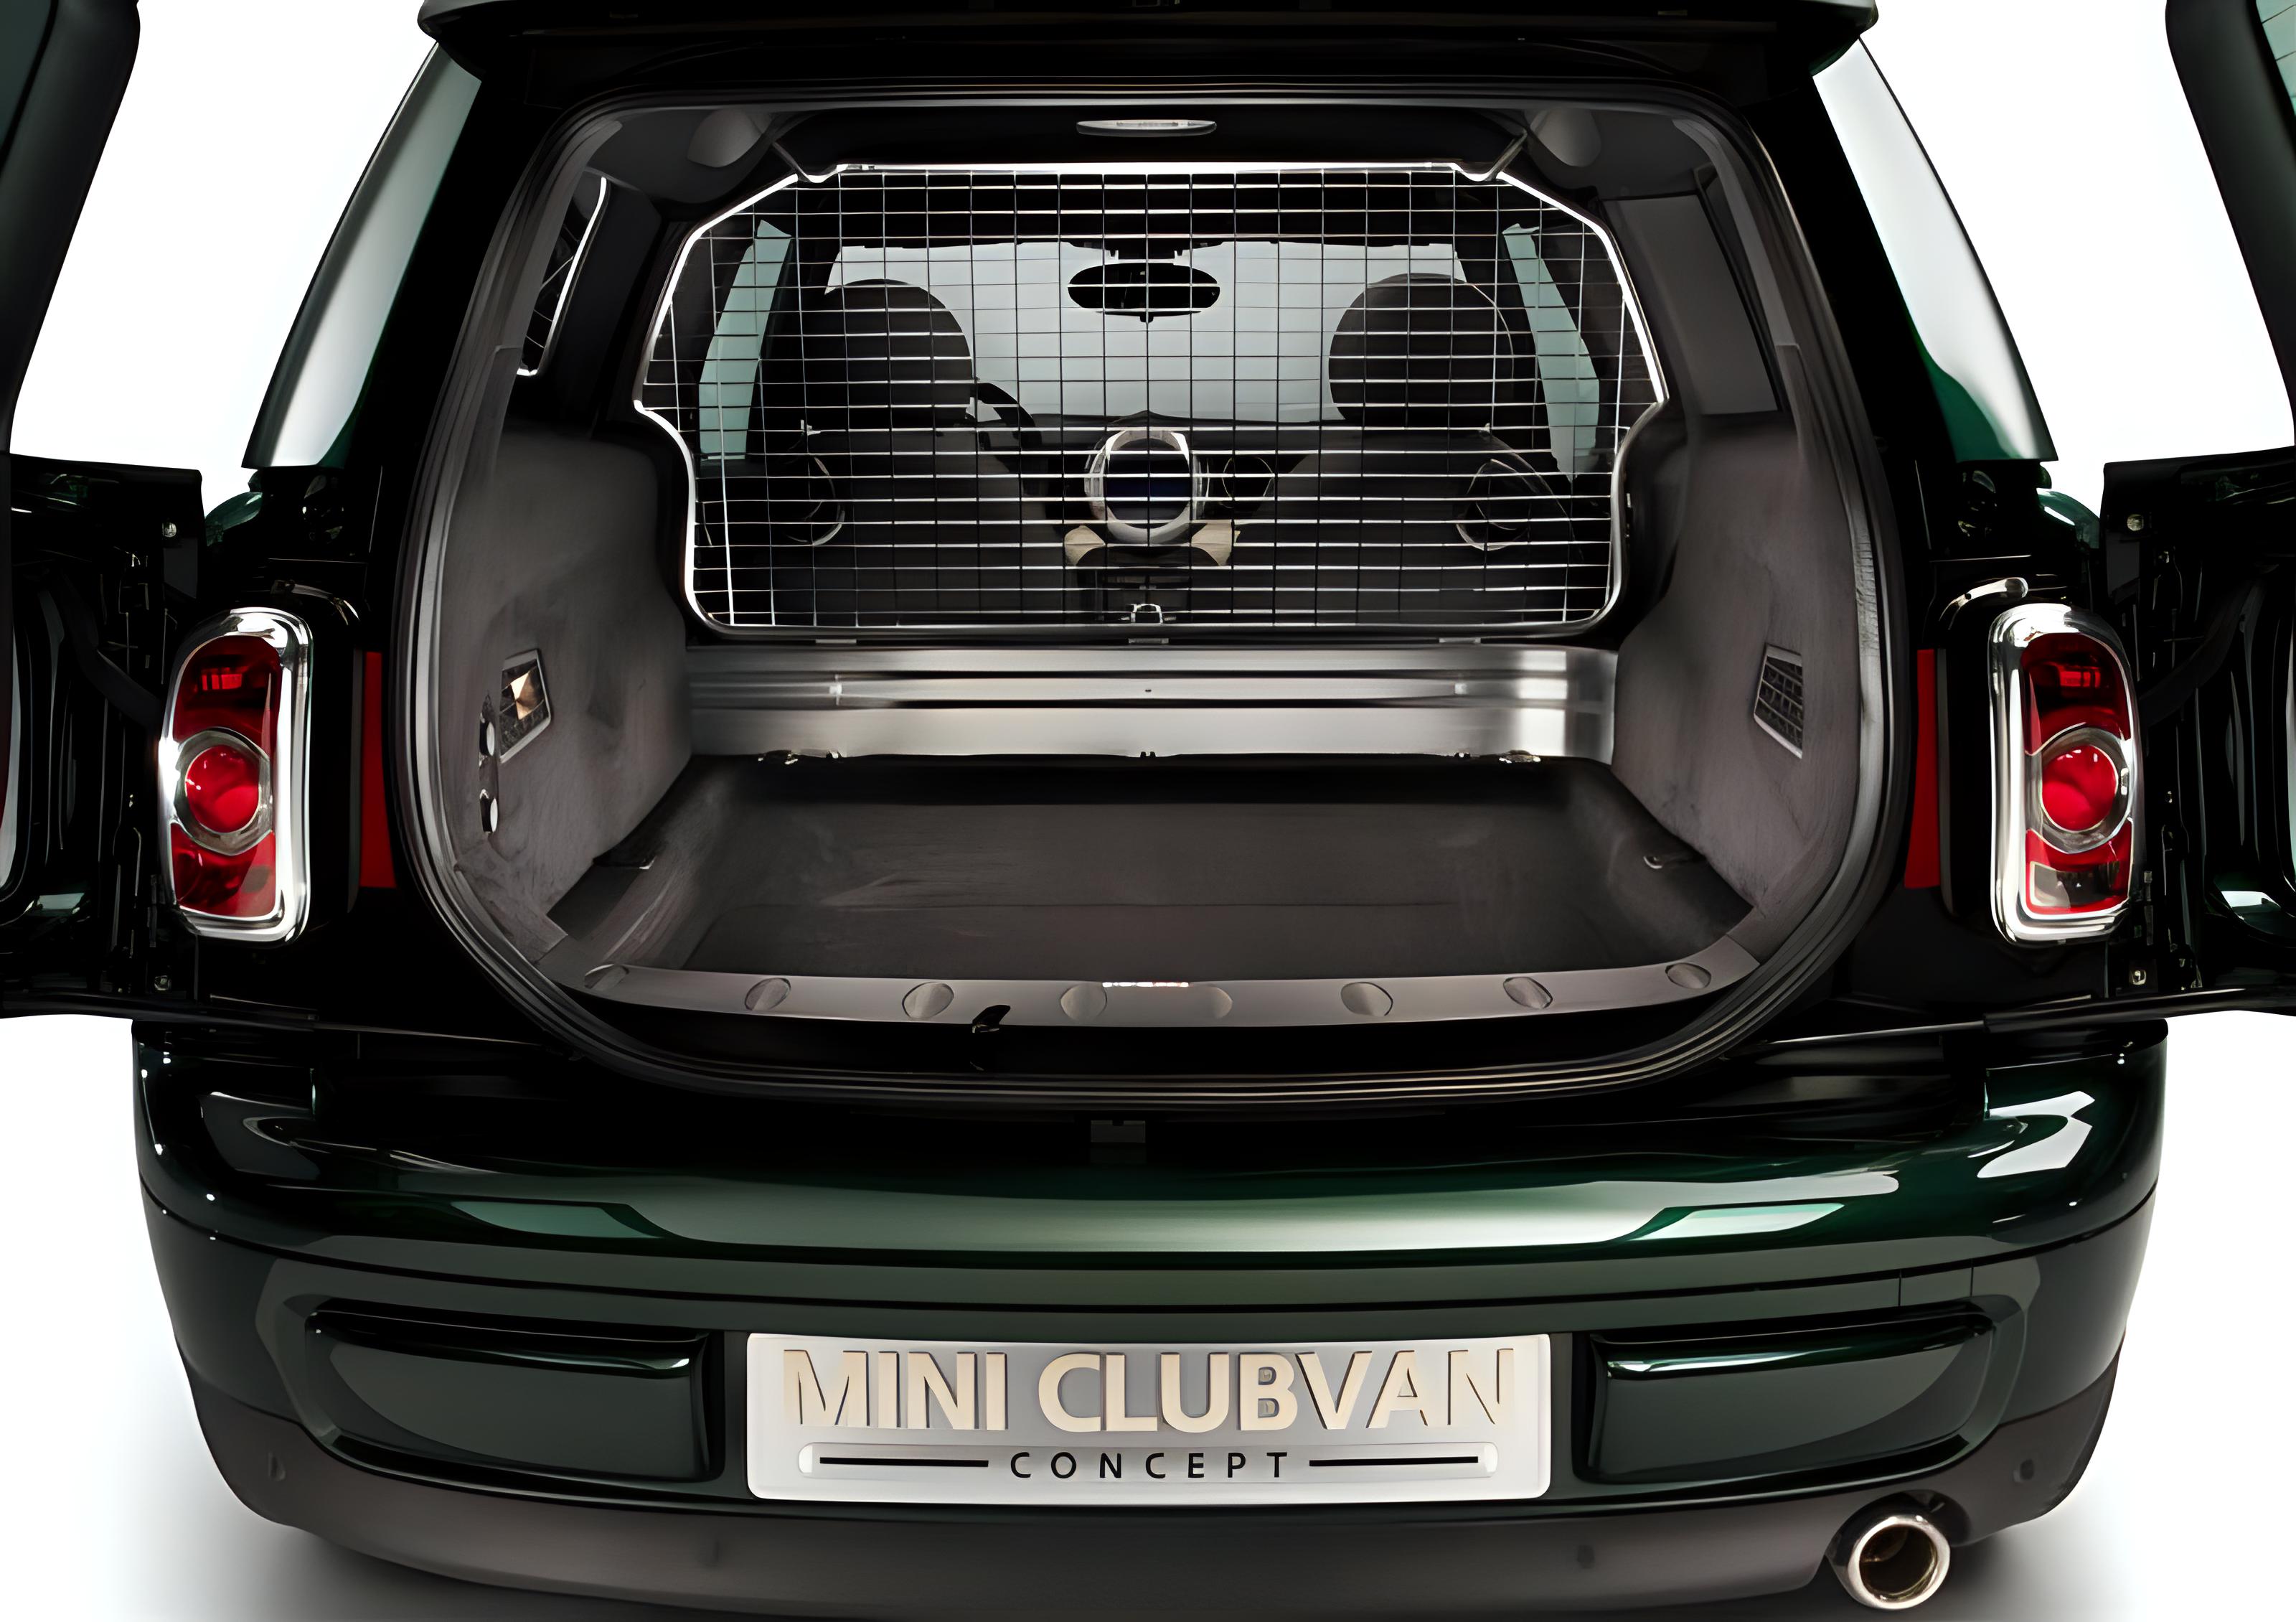 MINI Clubvan image #14